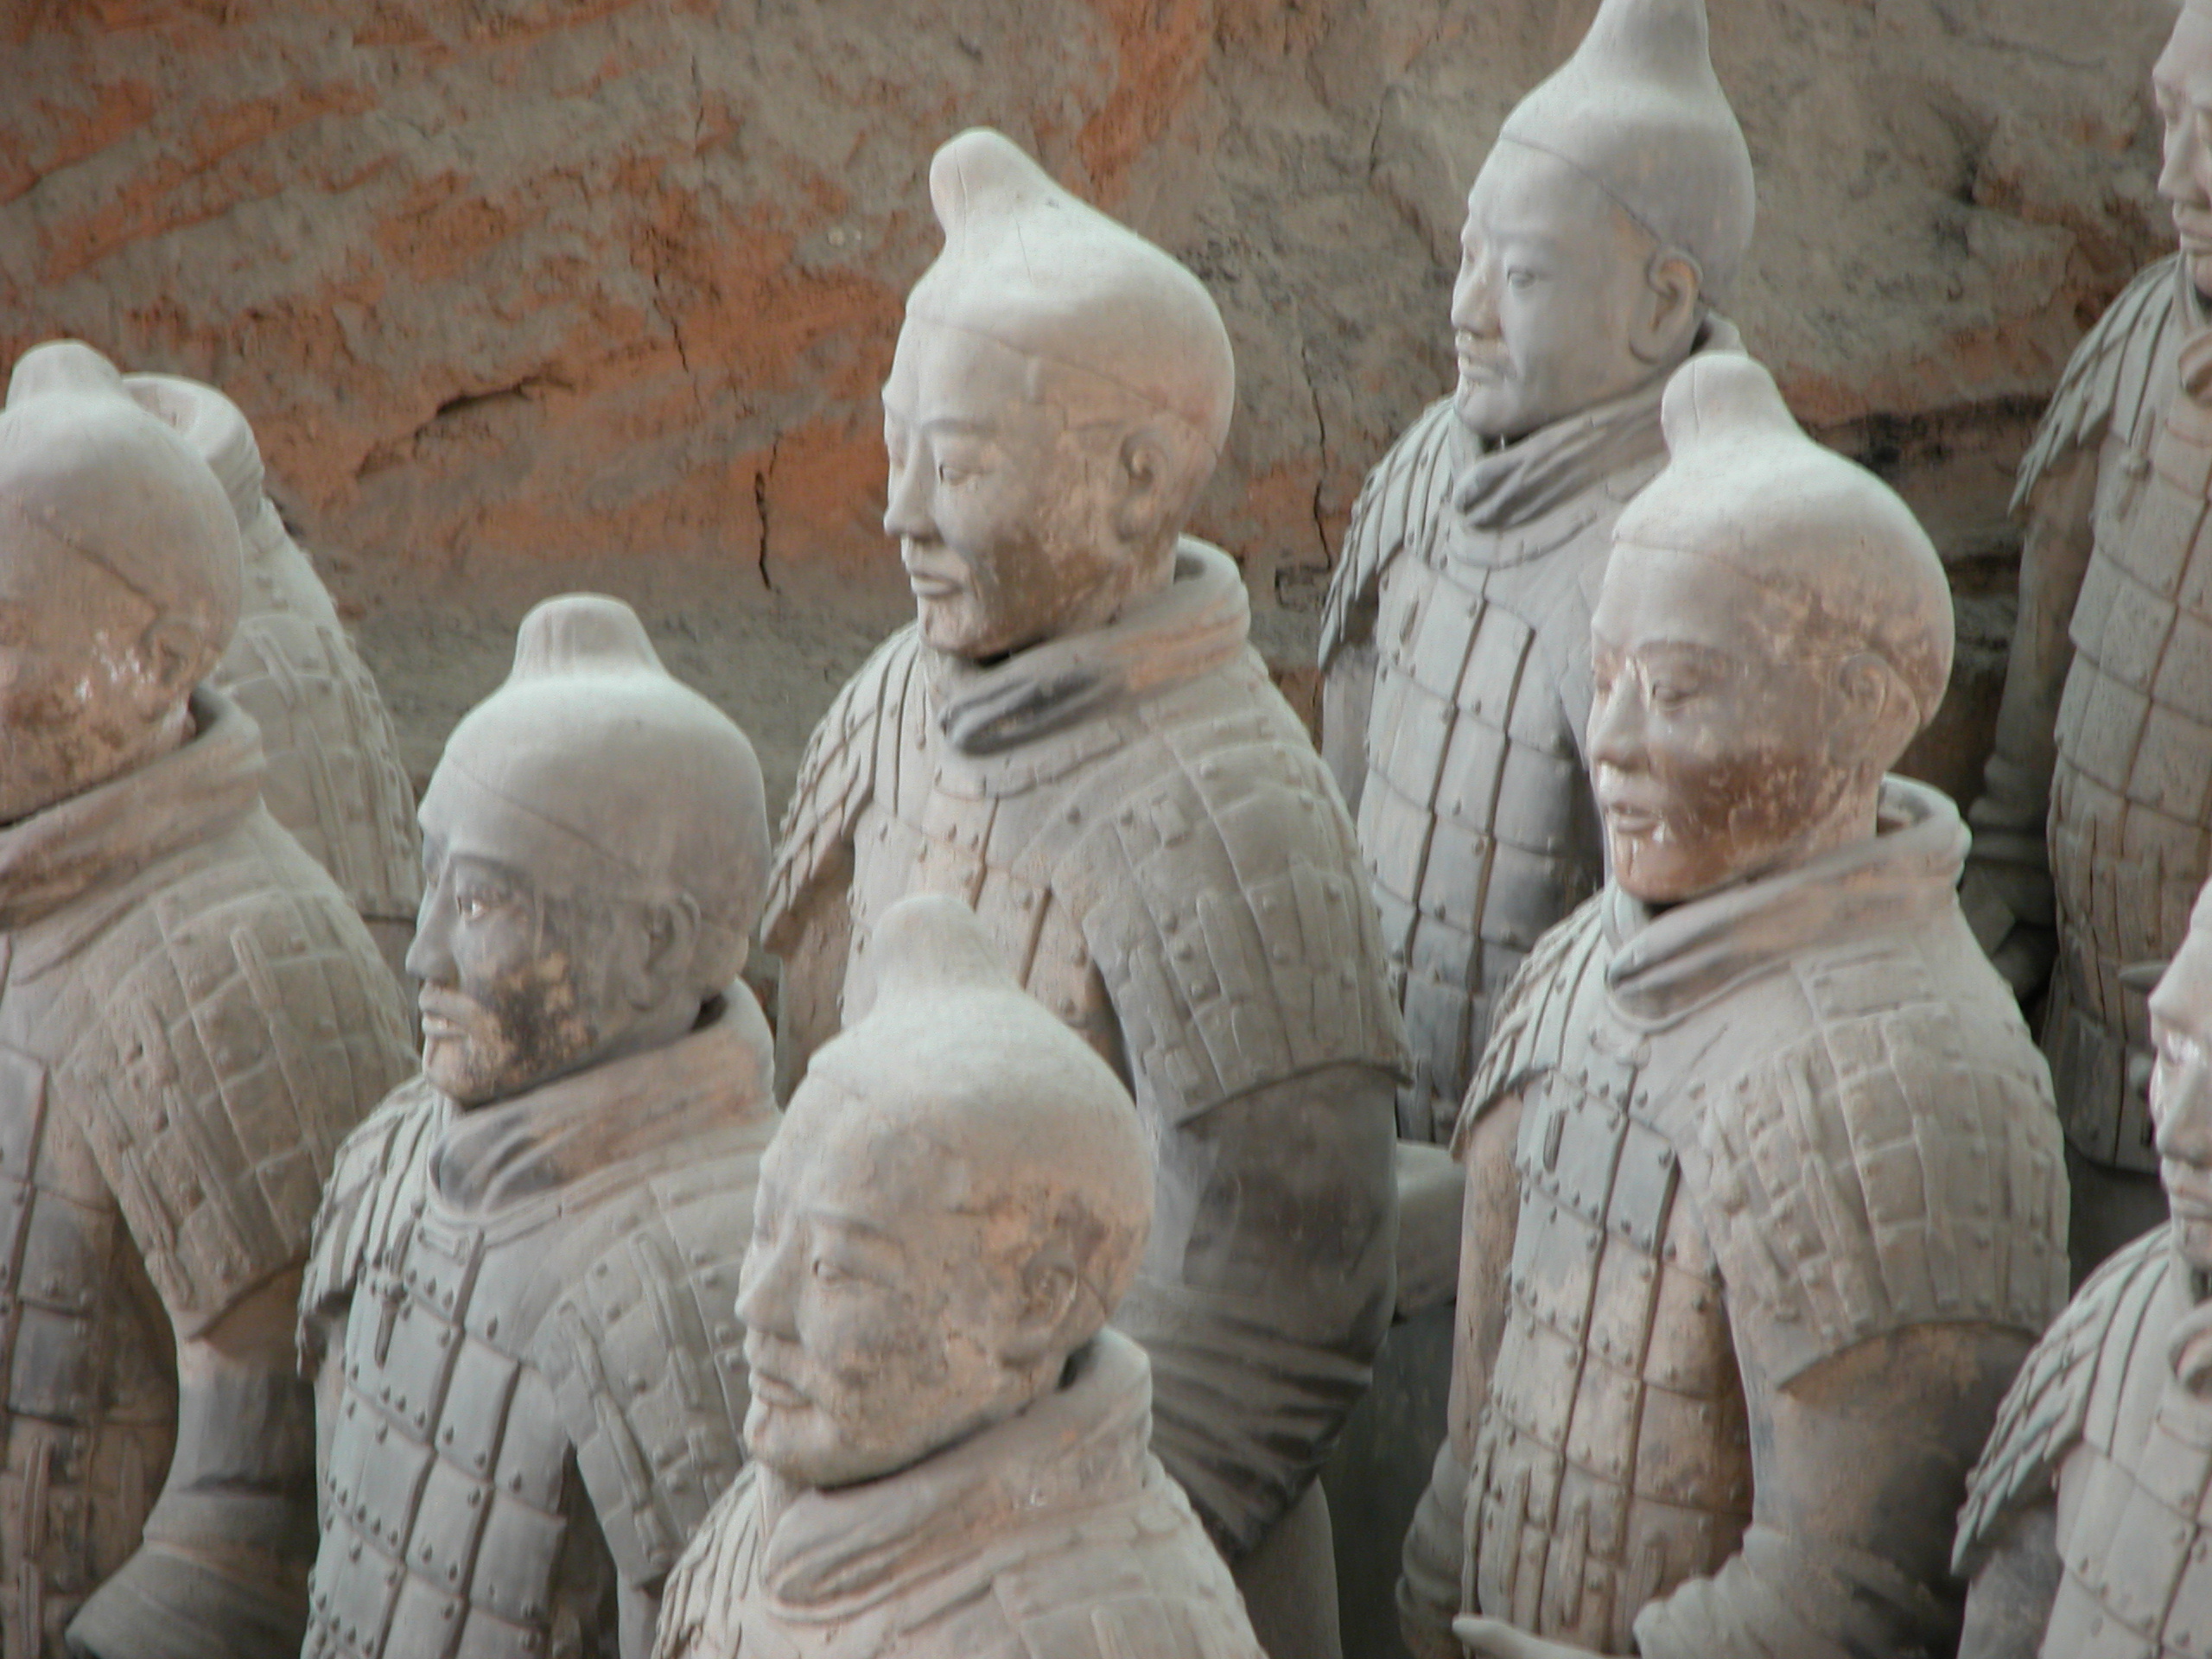 Terracotta army, China